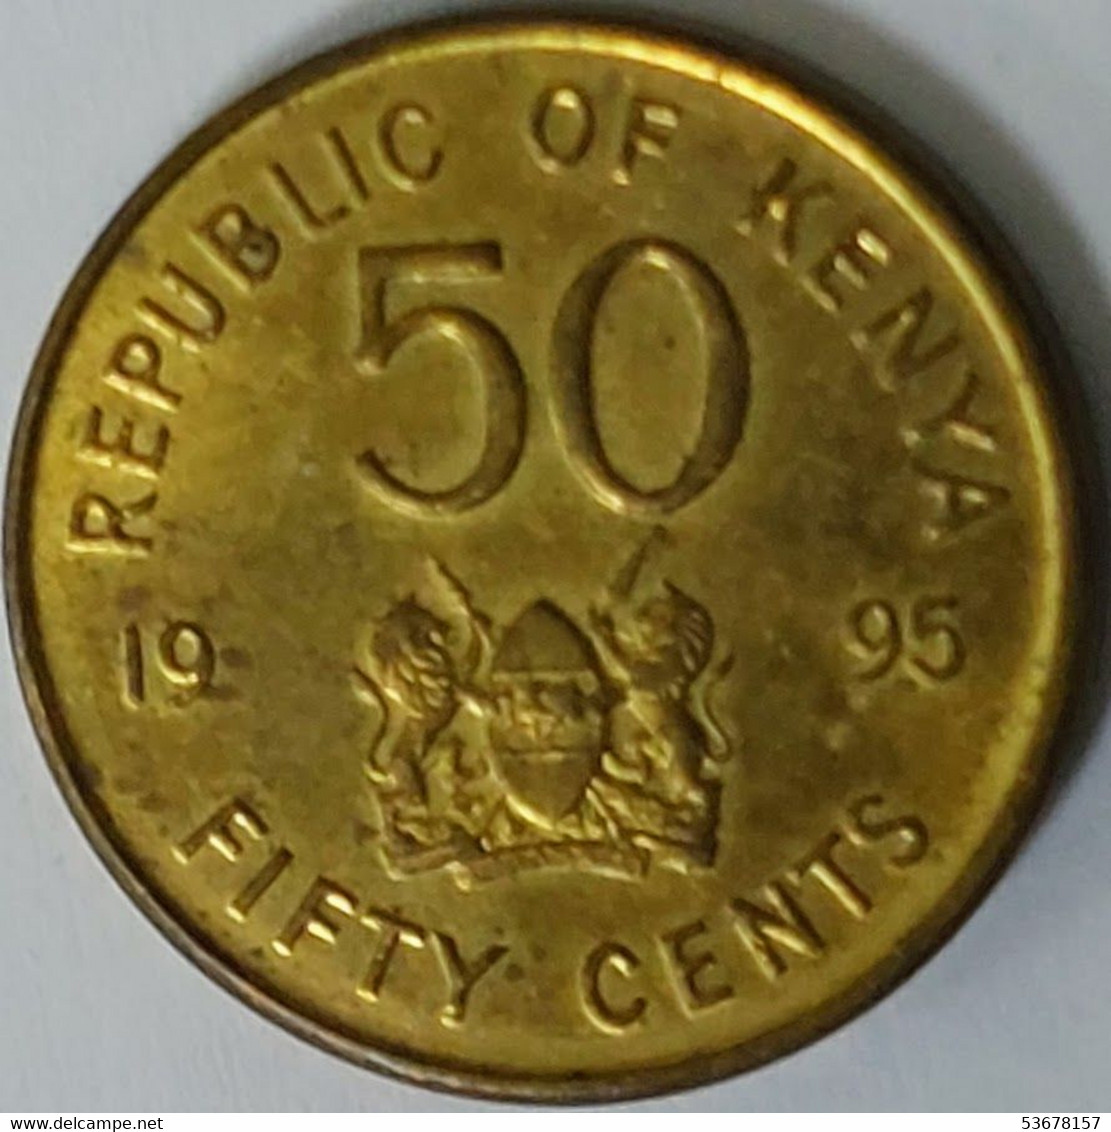 Kenya - 50 Cents 1995, KM# 28 (#1323) - Kenya